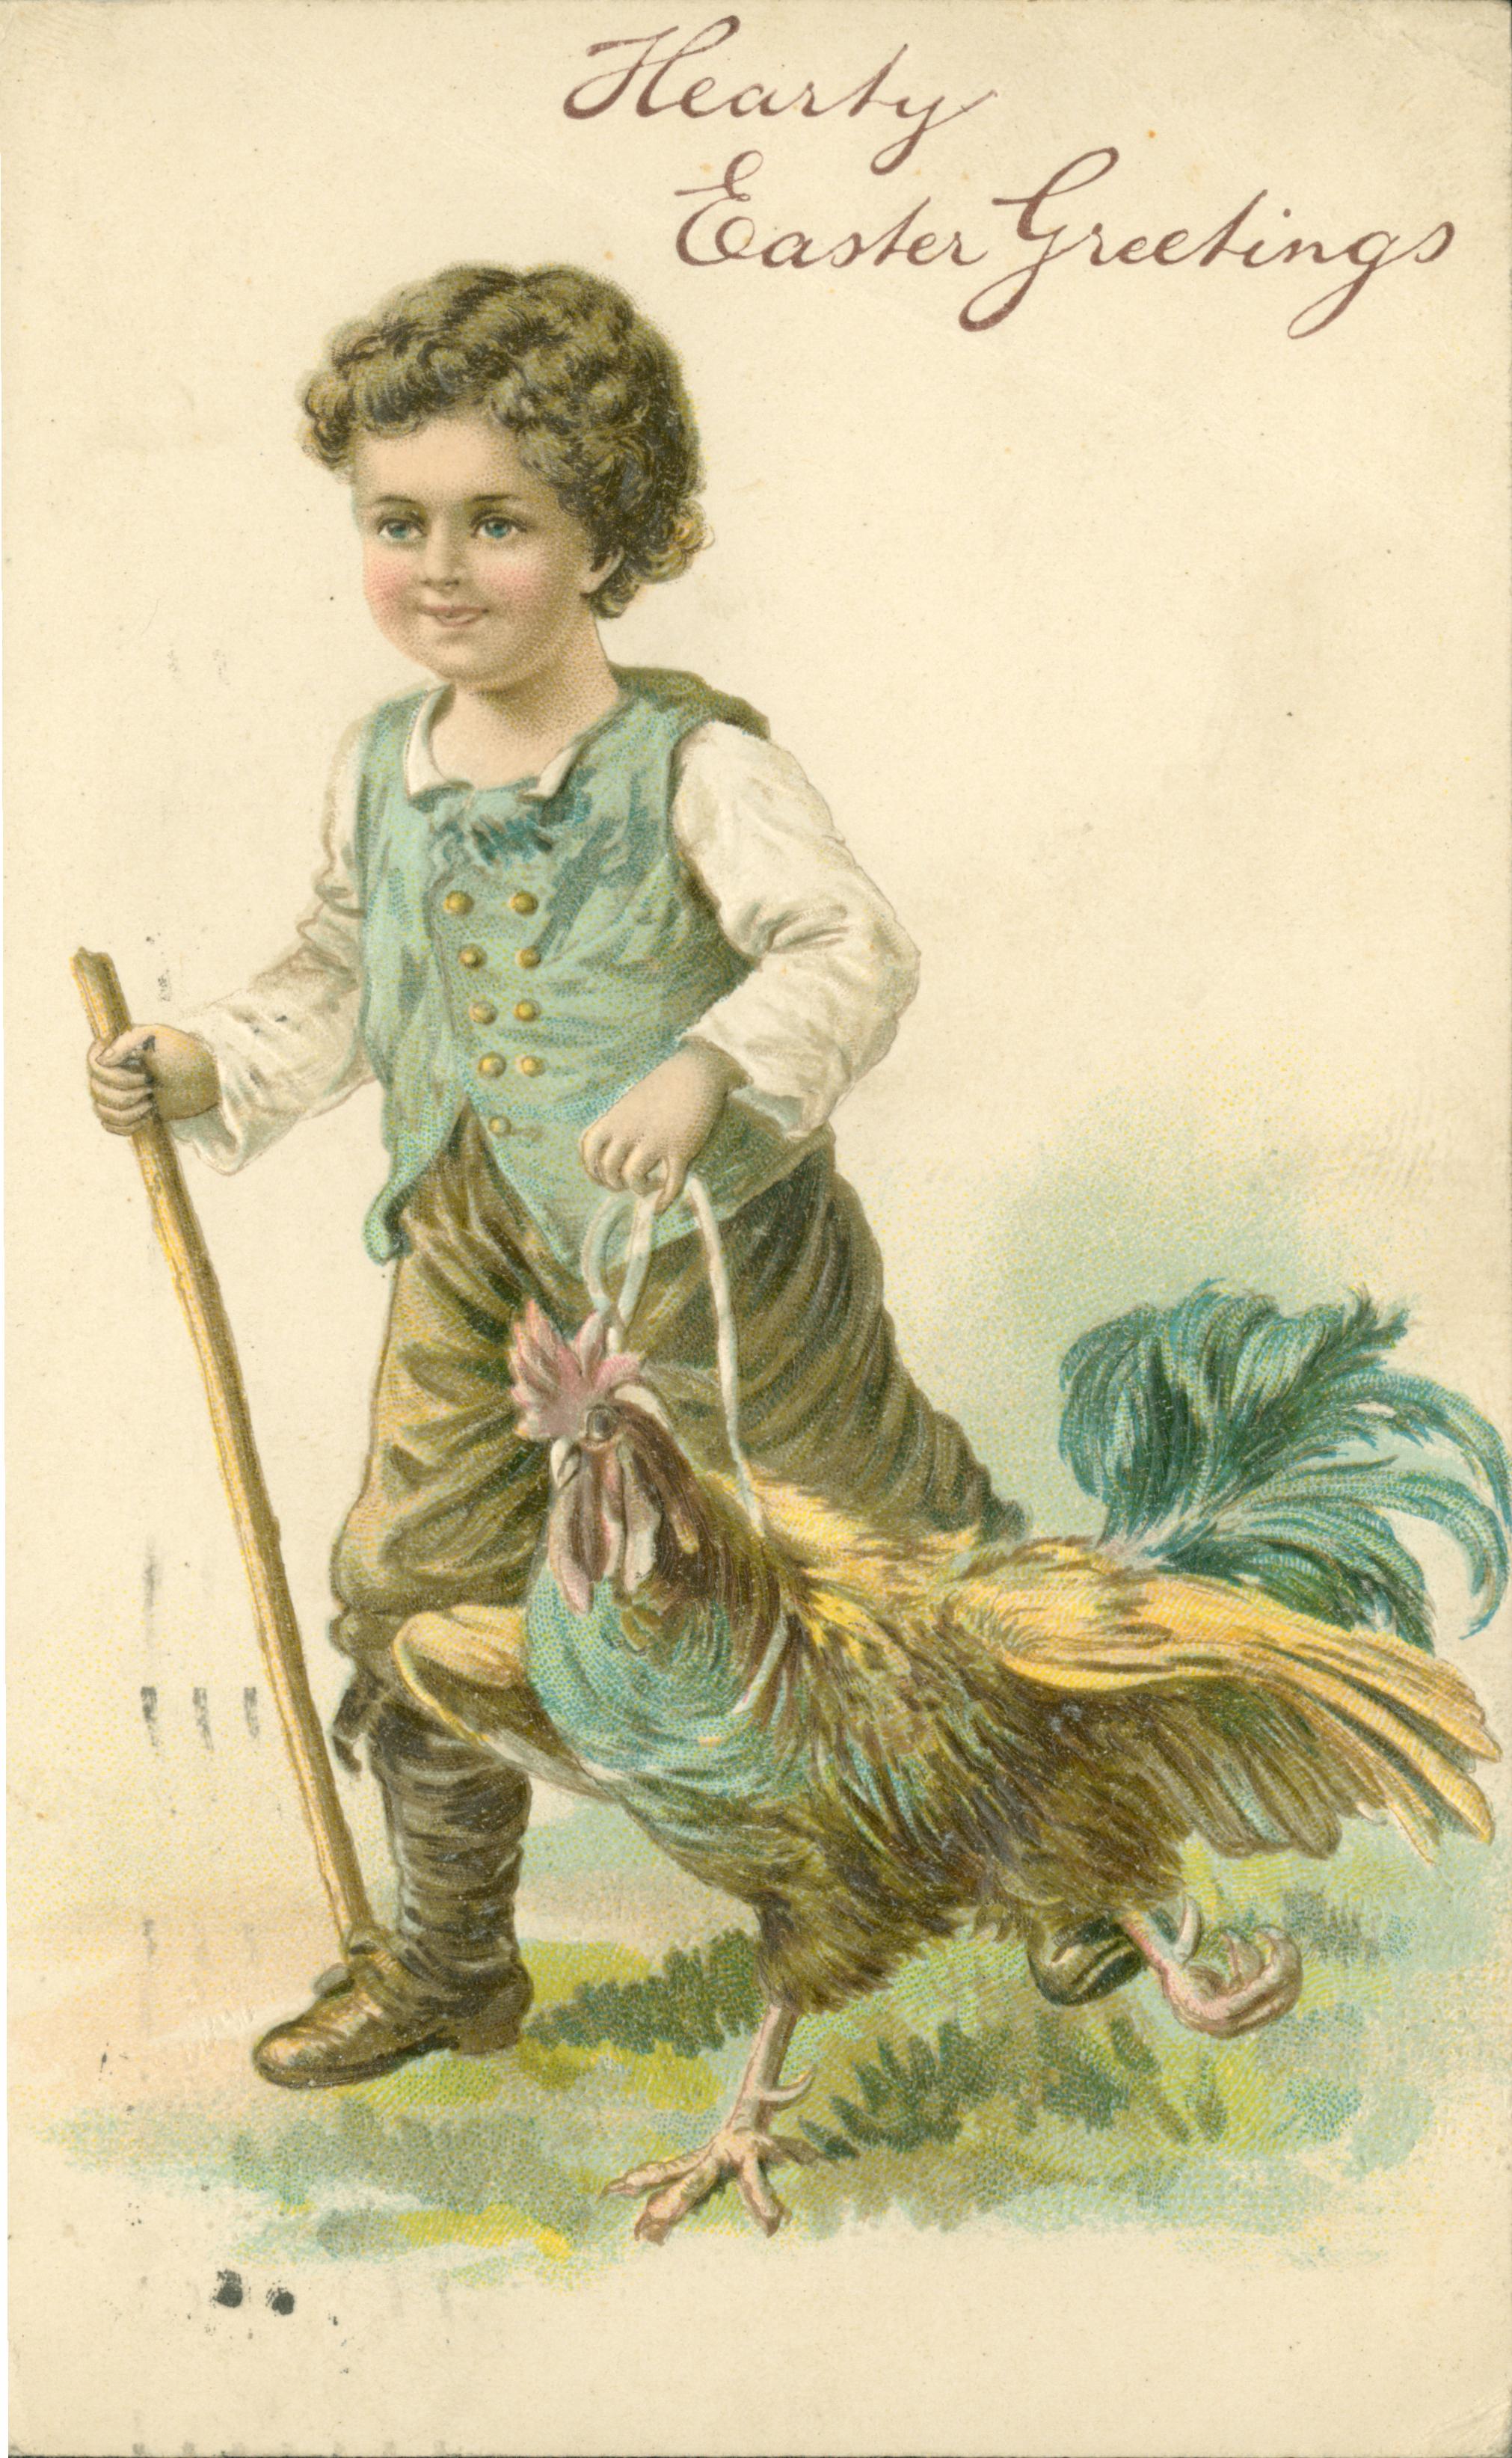 A little boy walking with a chicken on a leash.